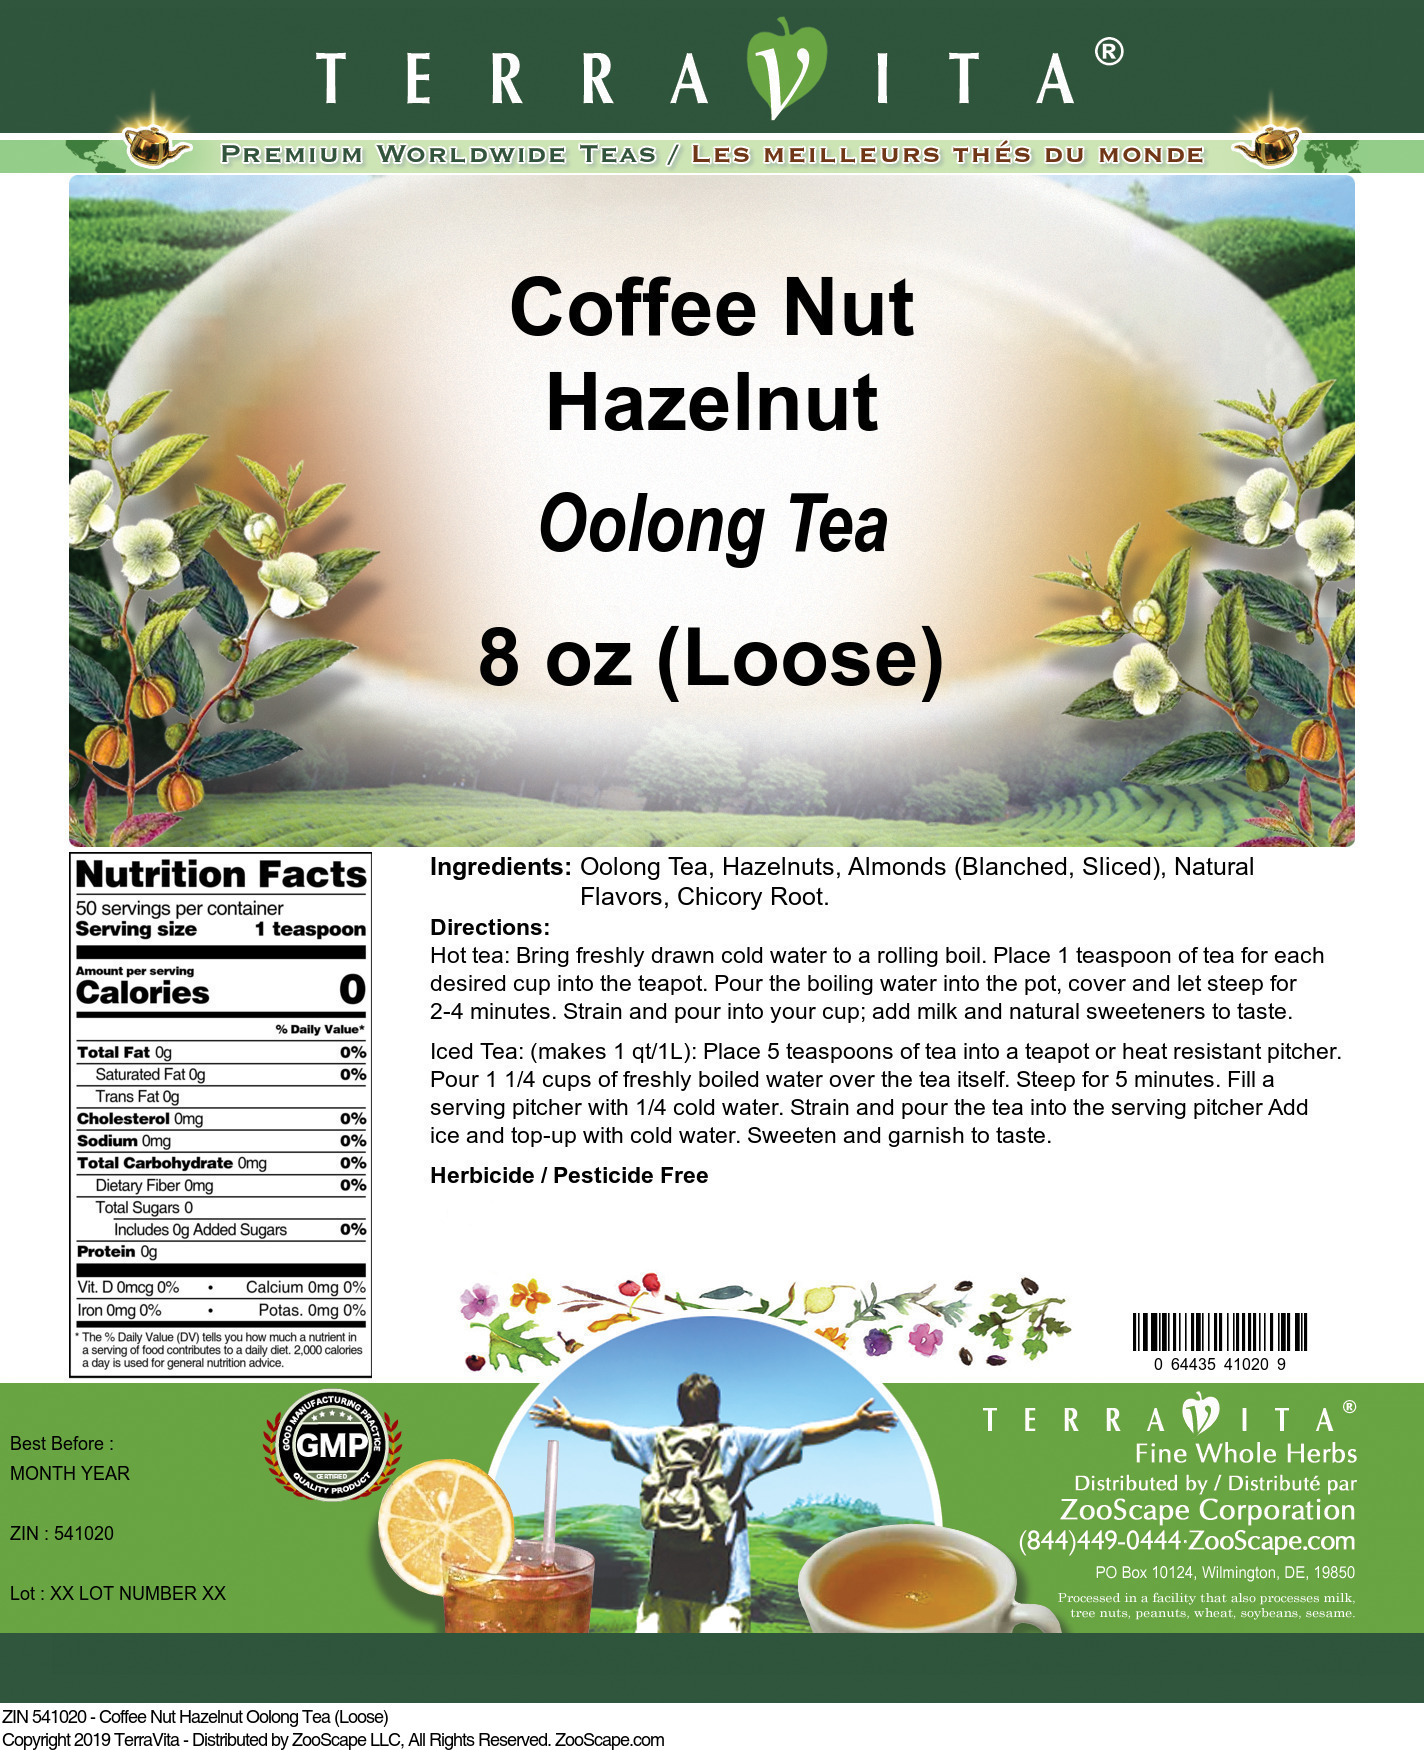 Coffee Nut Hazelnut Oolong Tea (Loose) - Label